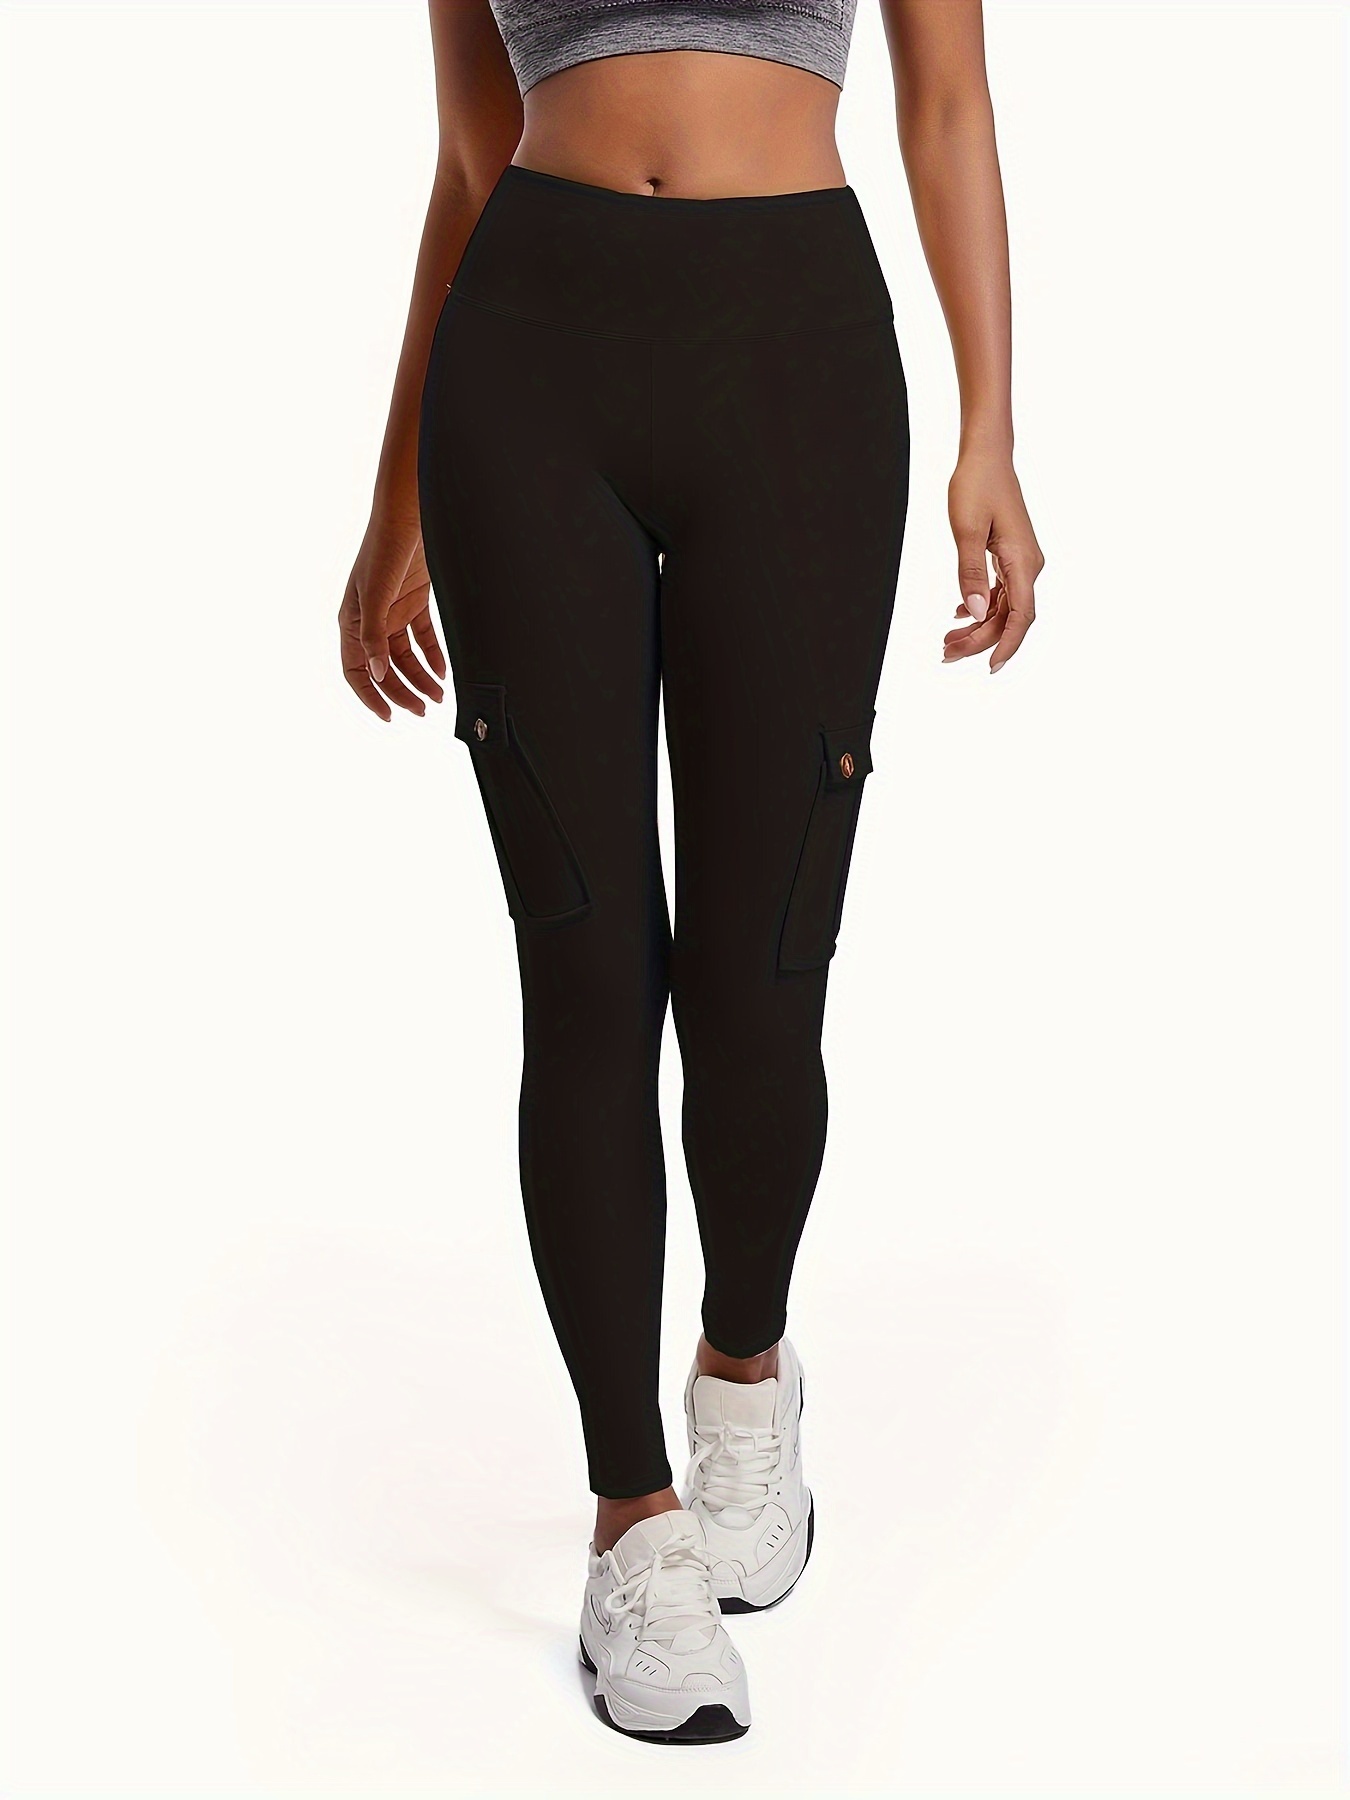 Women's Yoga Pants with Pockets  Cargo leggings, Sporty leggings,  Sportswear leggings